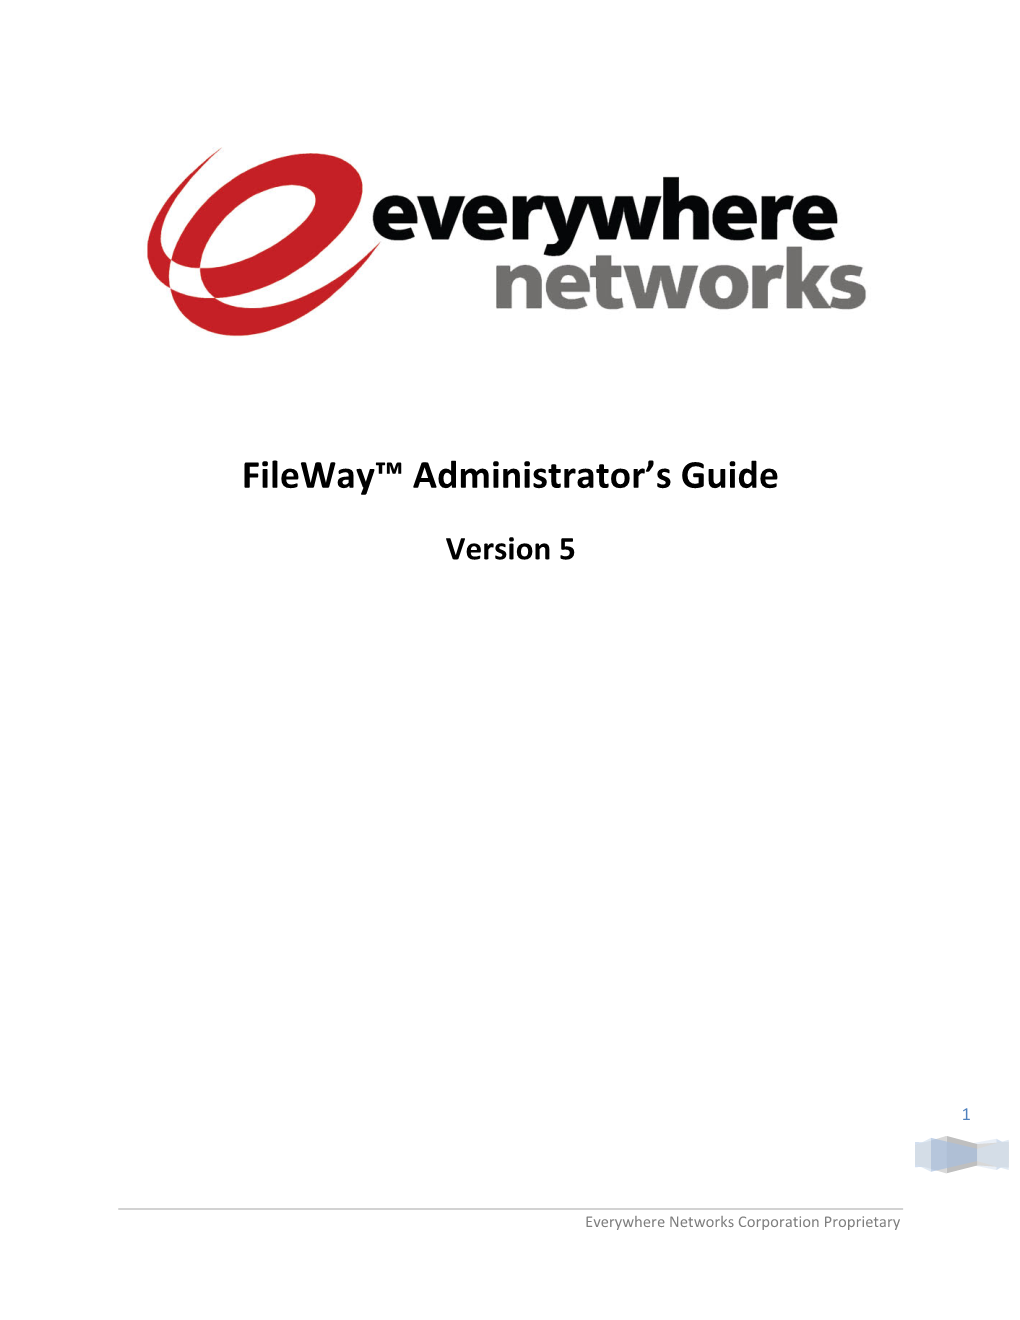 Fileway Administrator's Guide 2